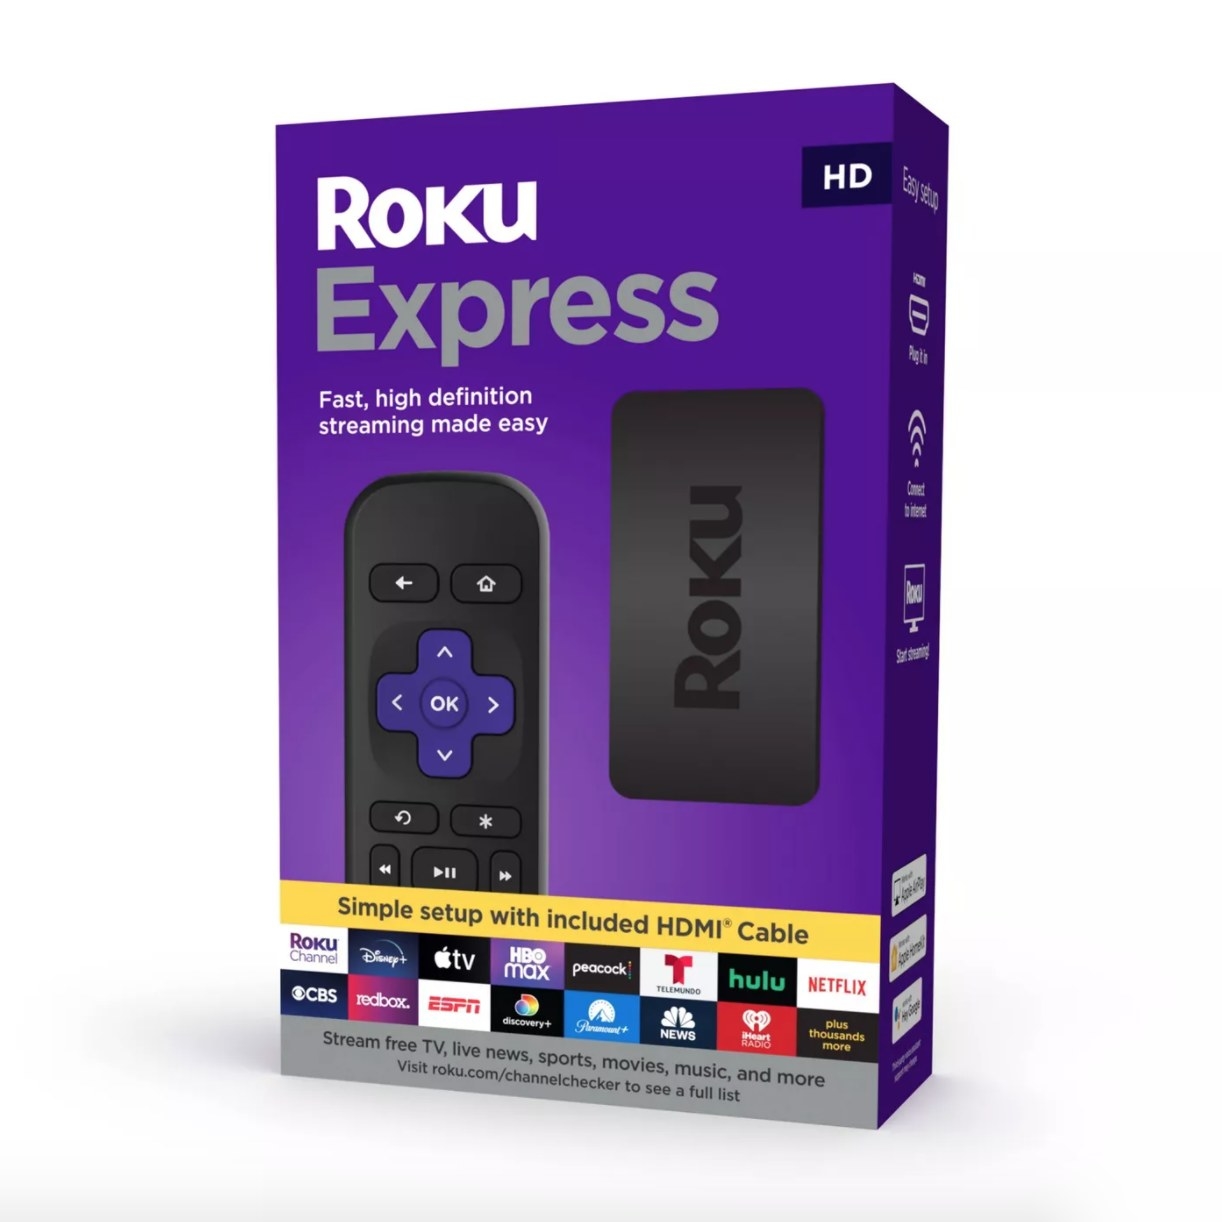 Roku streaming device in purple box